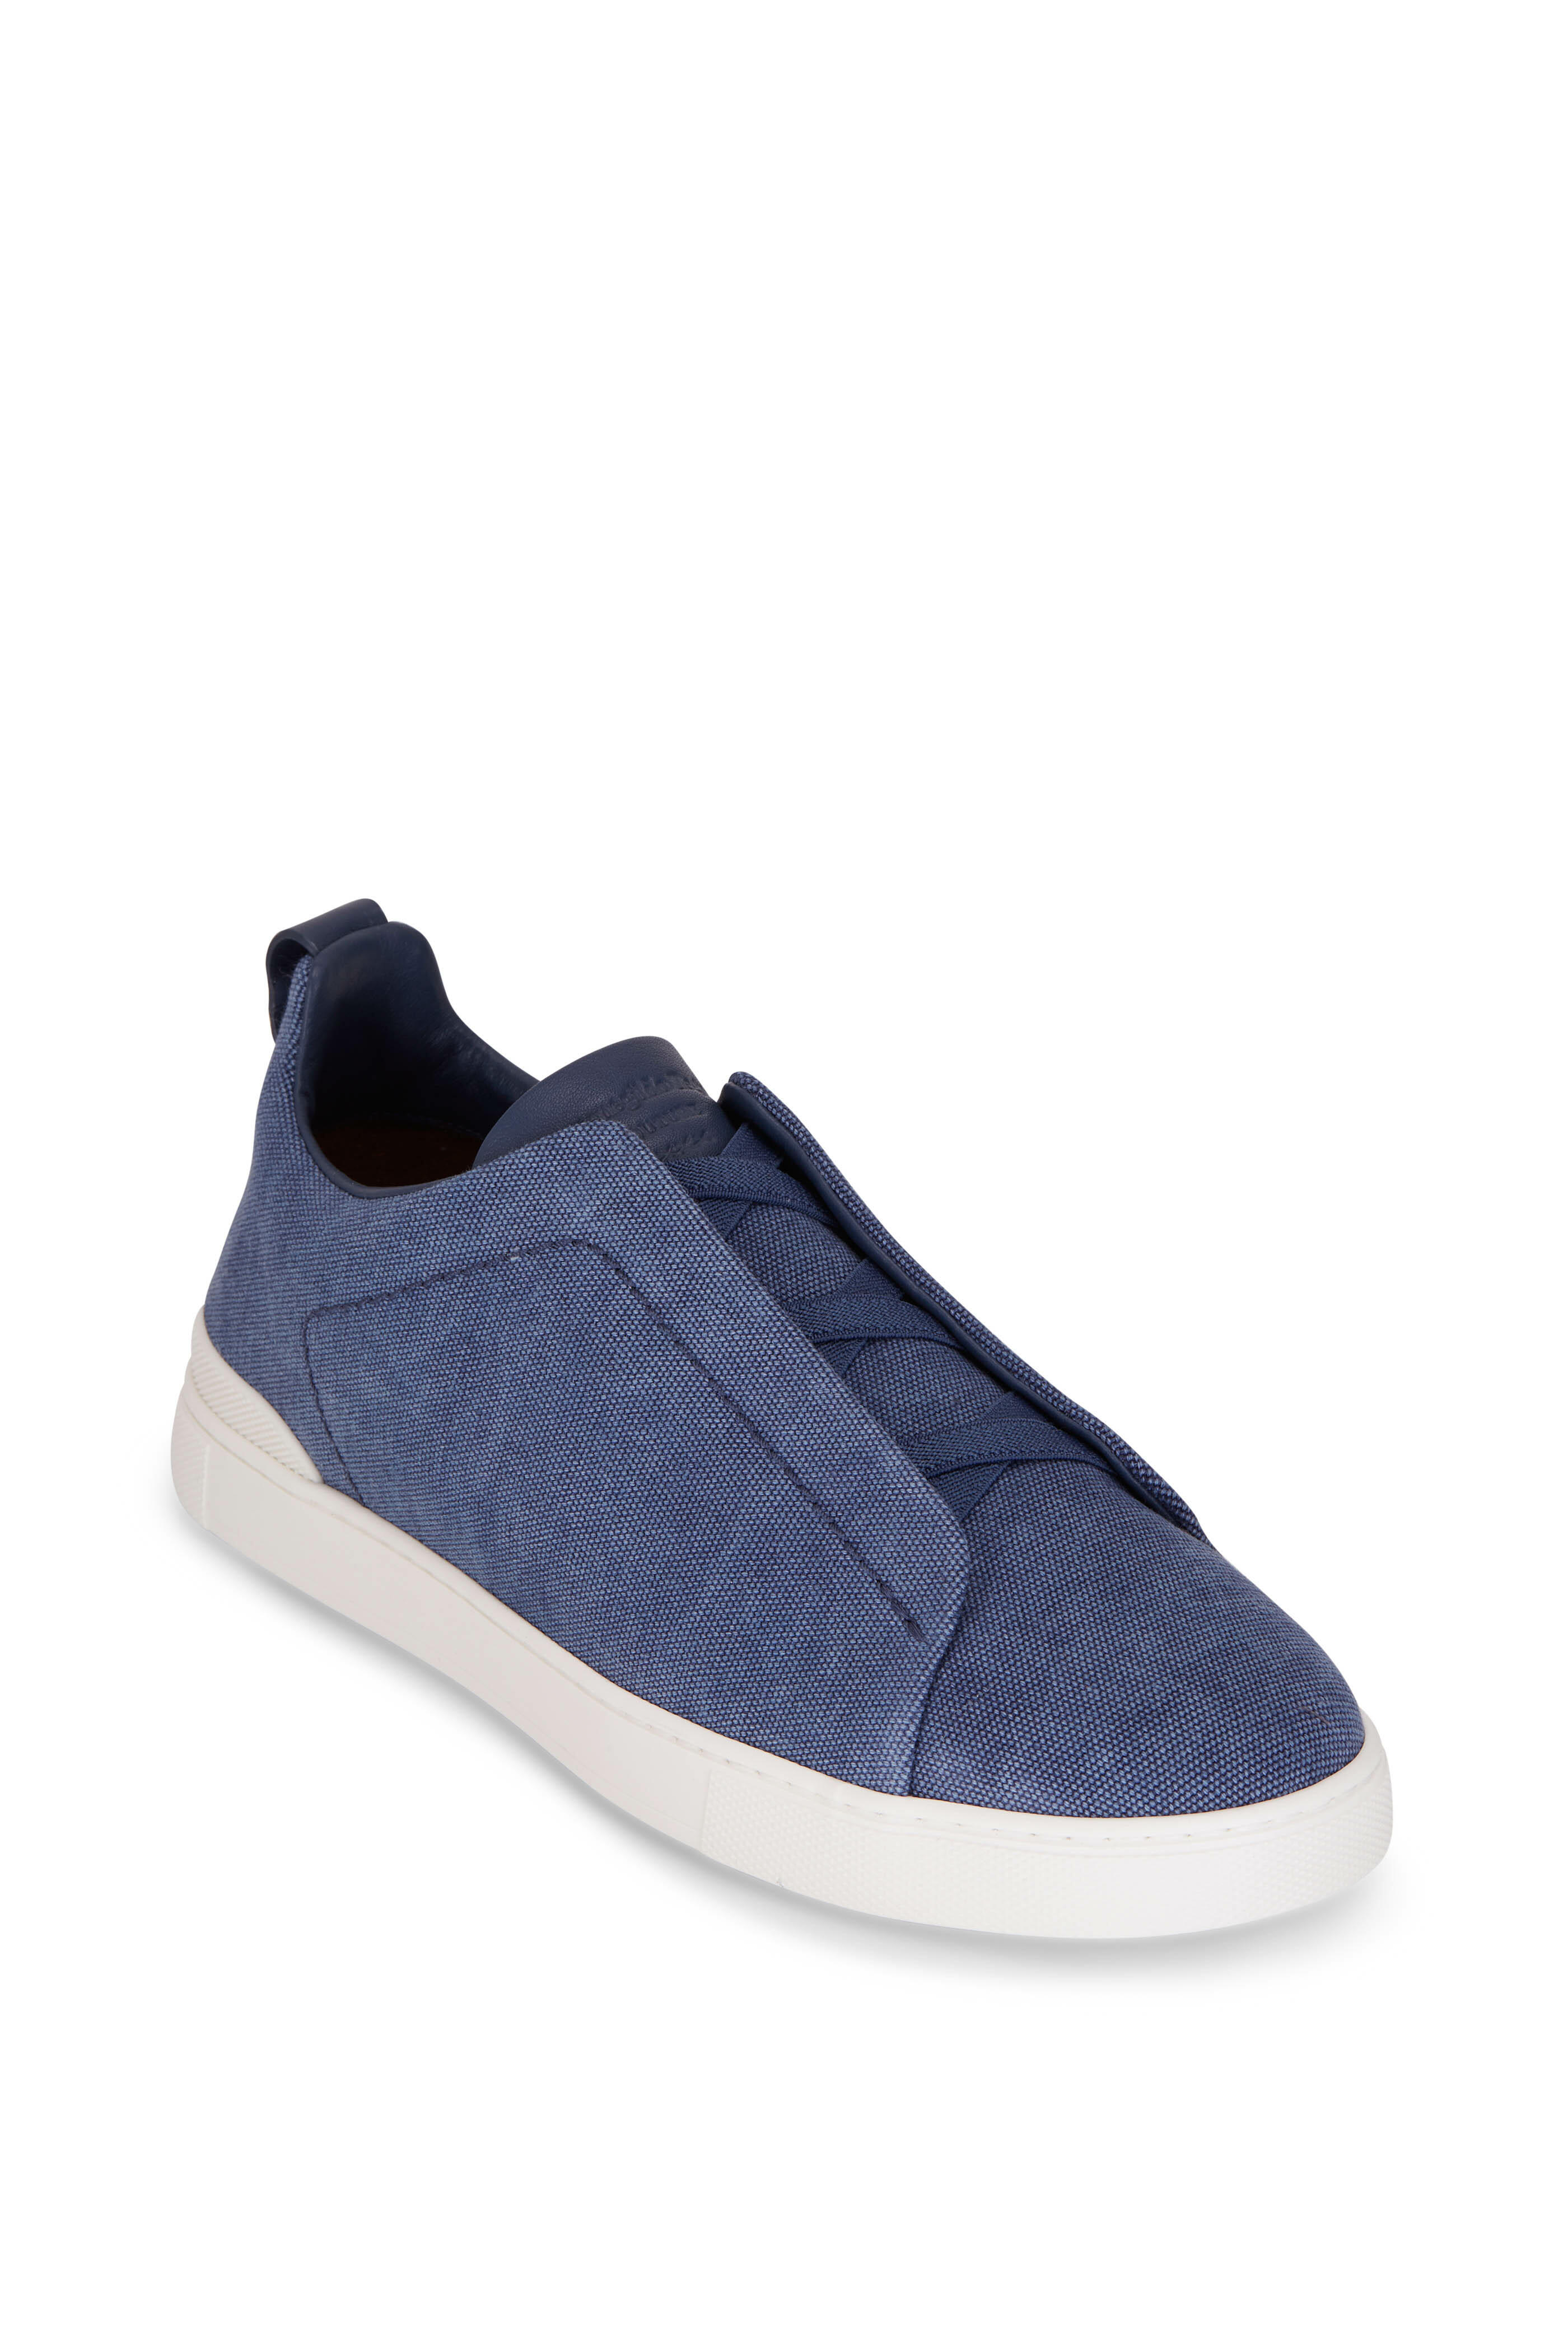 Zegna - Triple Stitch Blue Canvas Low Top Sneaker